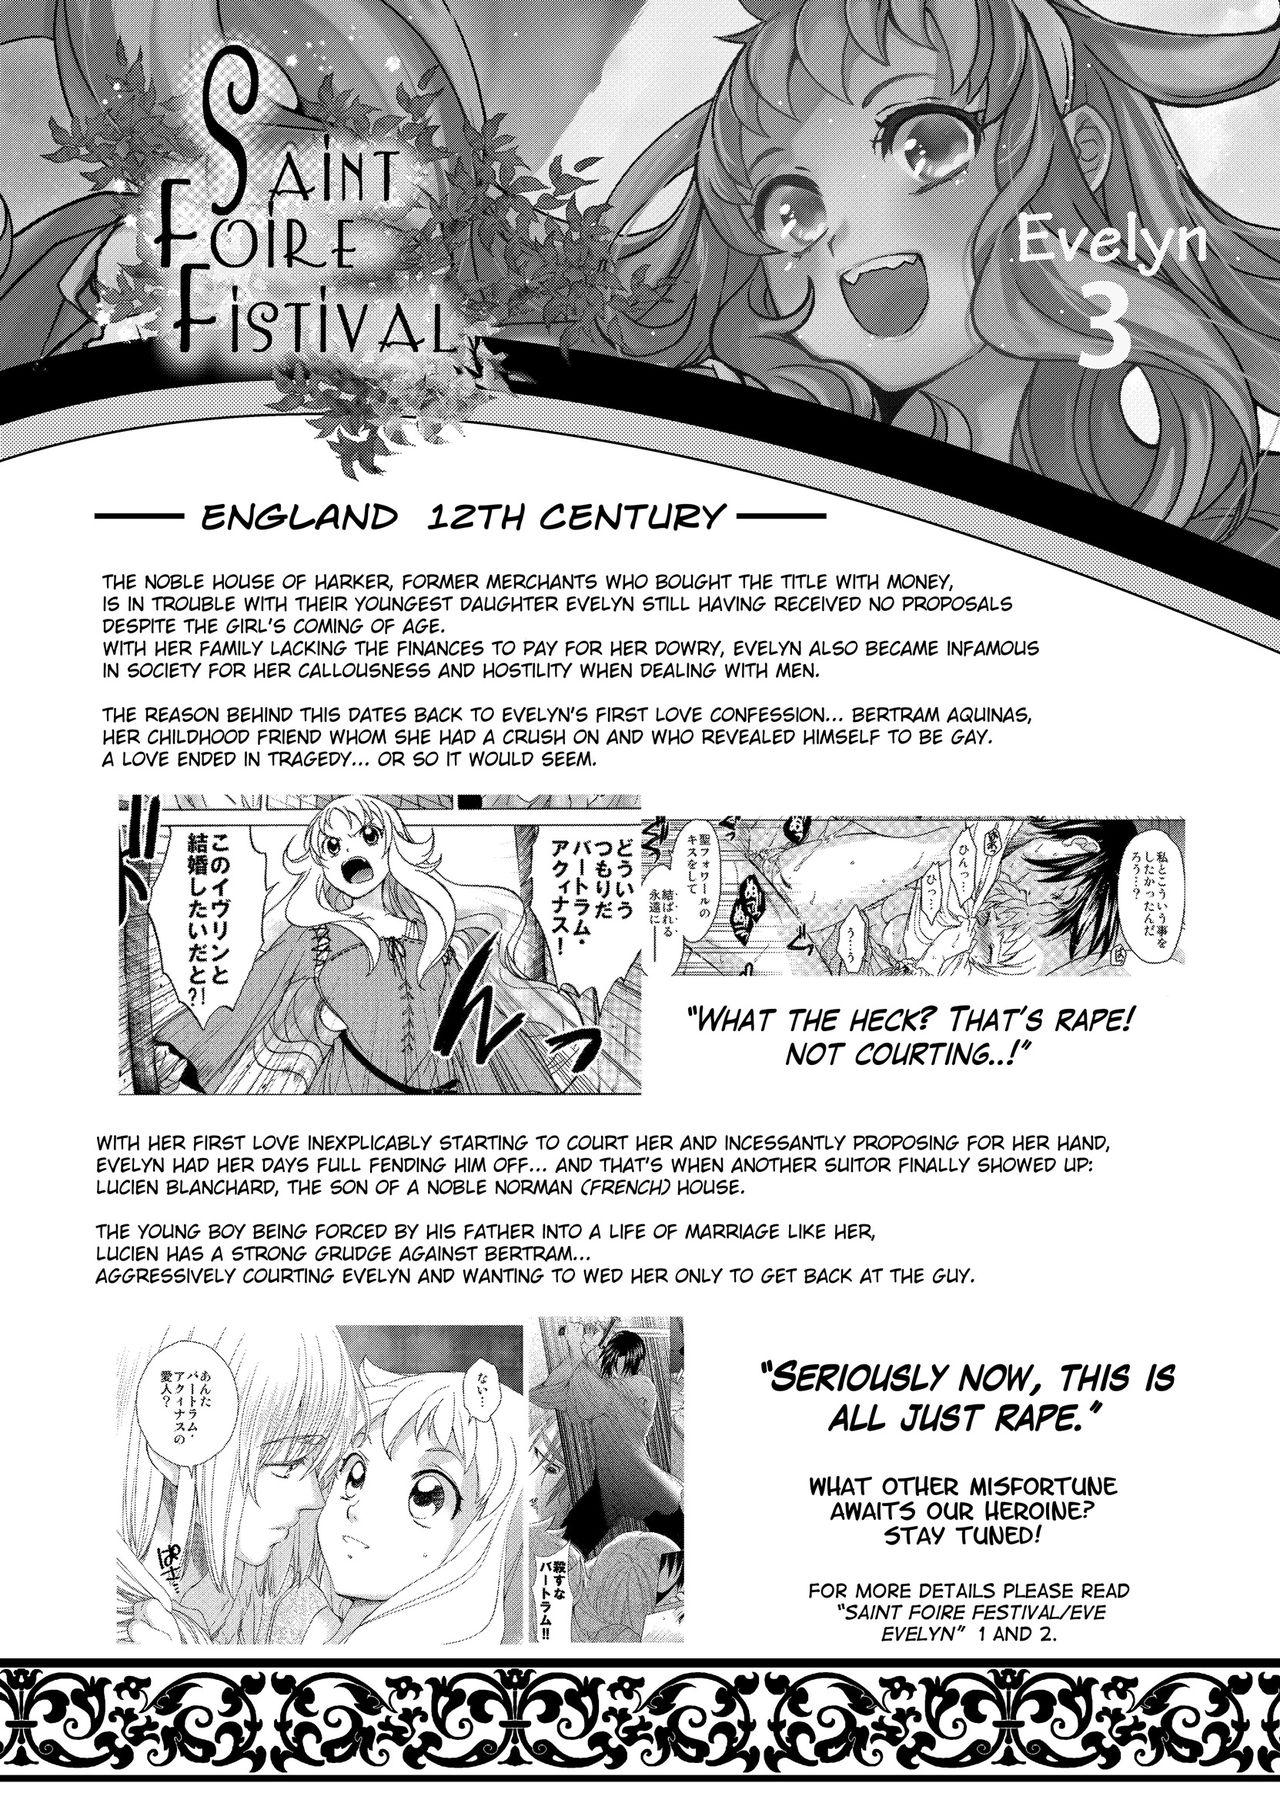 Internal Saint Foire Festival/eve Evelyn:3 - Original Jerking - Page 4